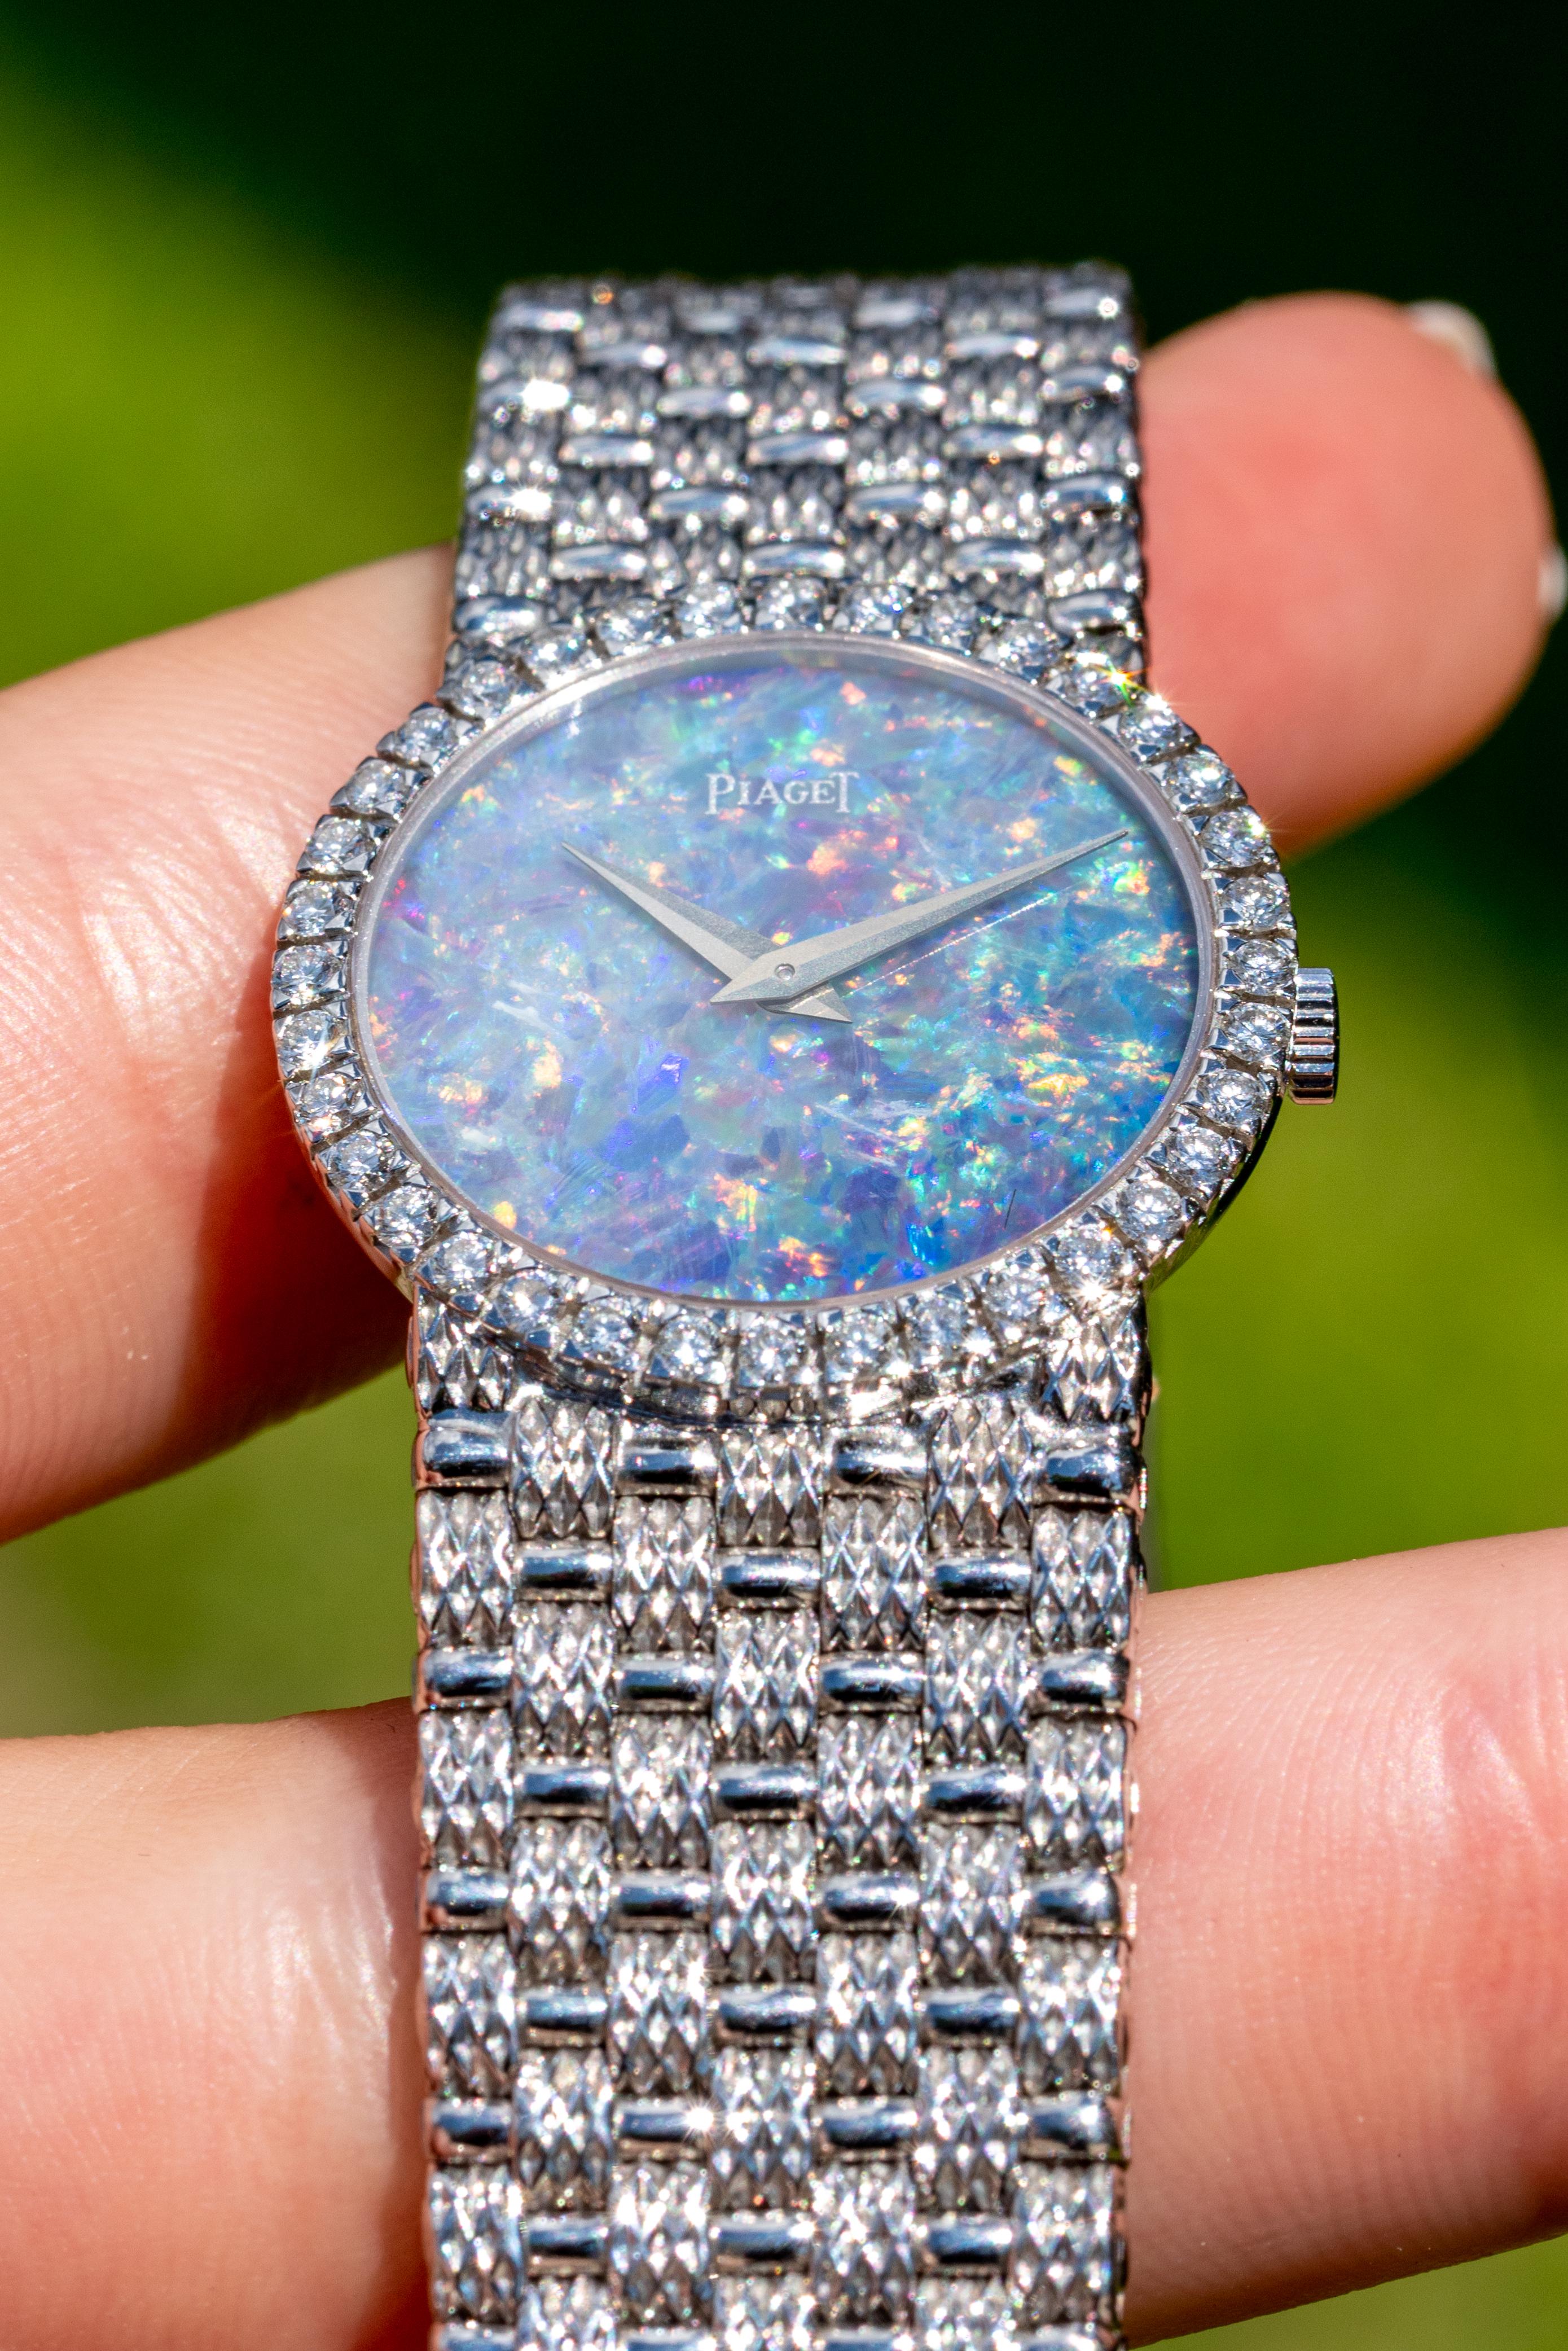 Piaget 9706D23 18k White Gold Opal Dial Diamond Ladies Watch For Sale 2